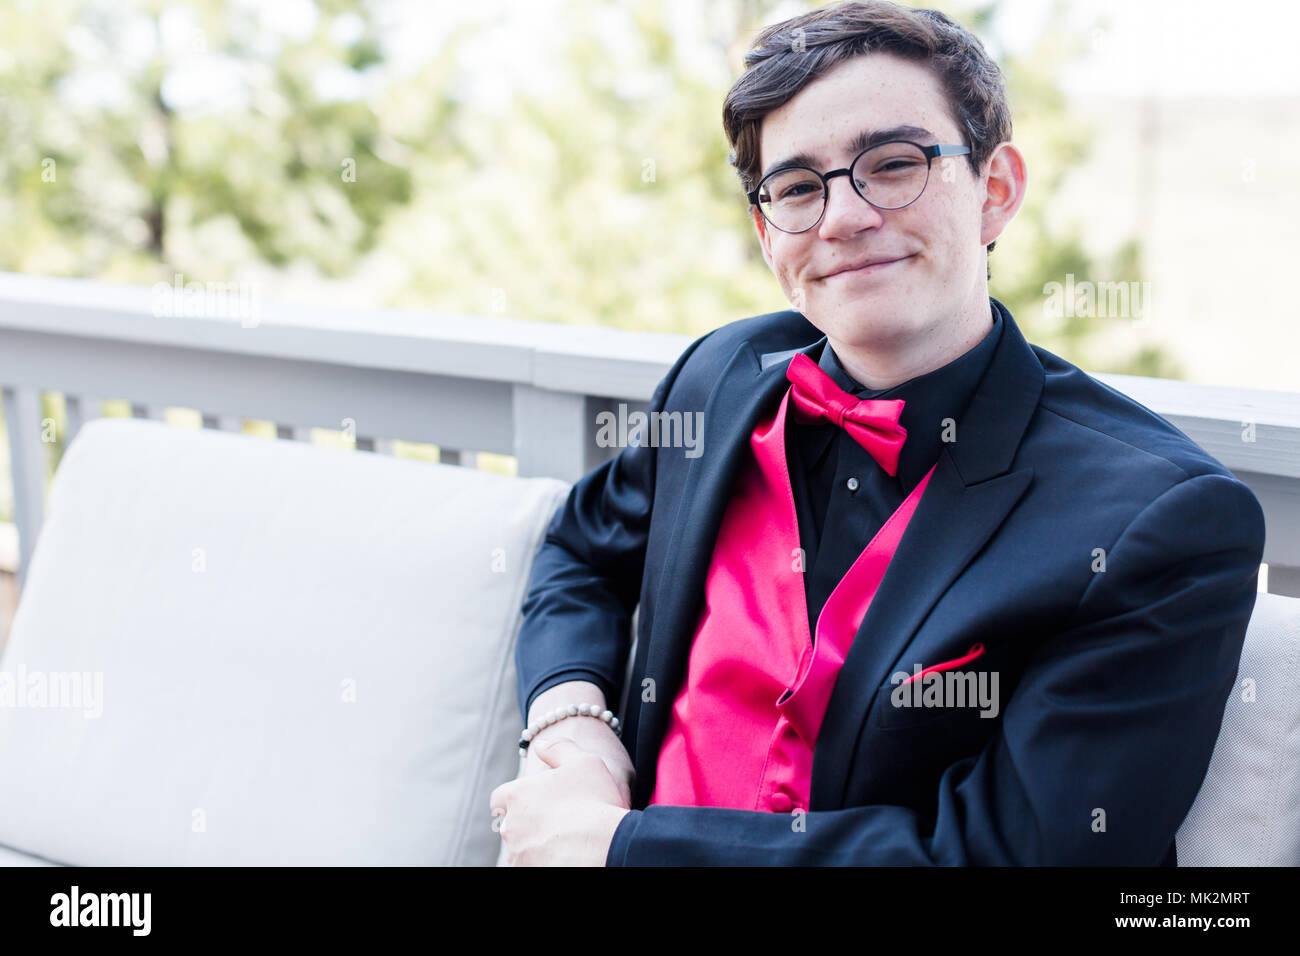 Teenager im Tuxedo vor seinem Senior Prom. Stockfoto